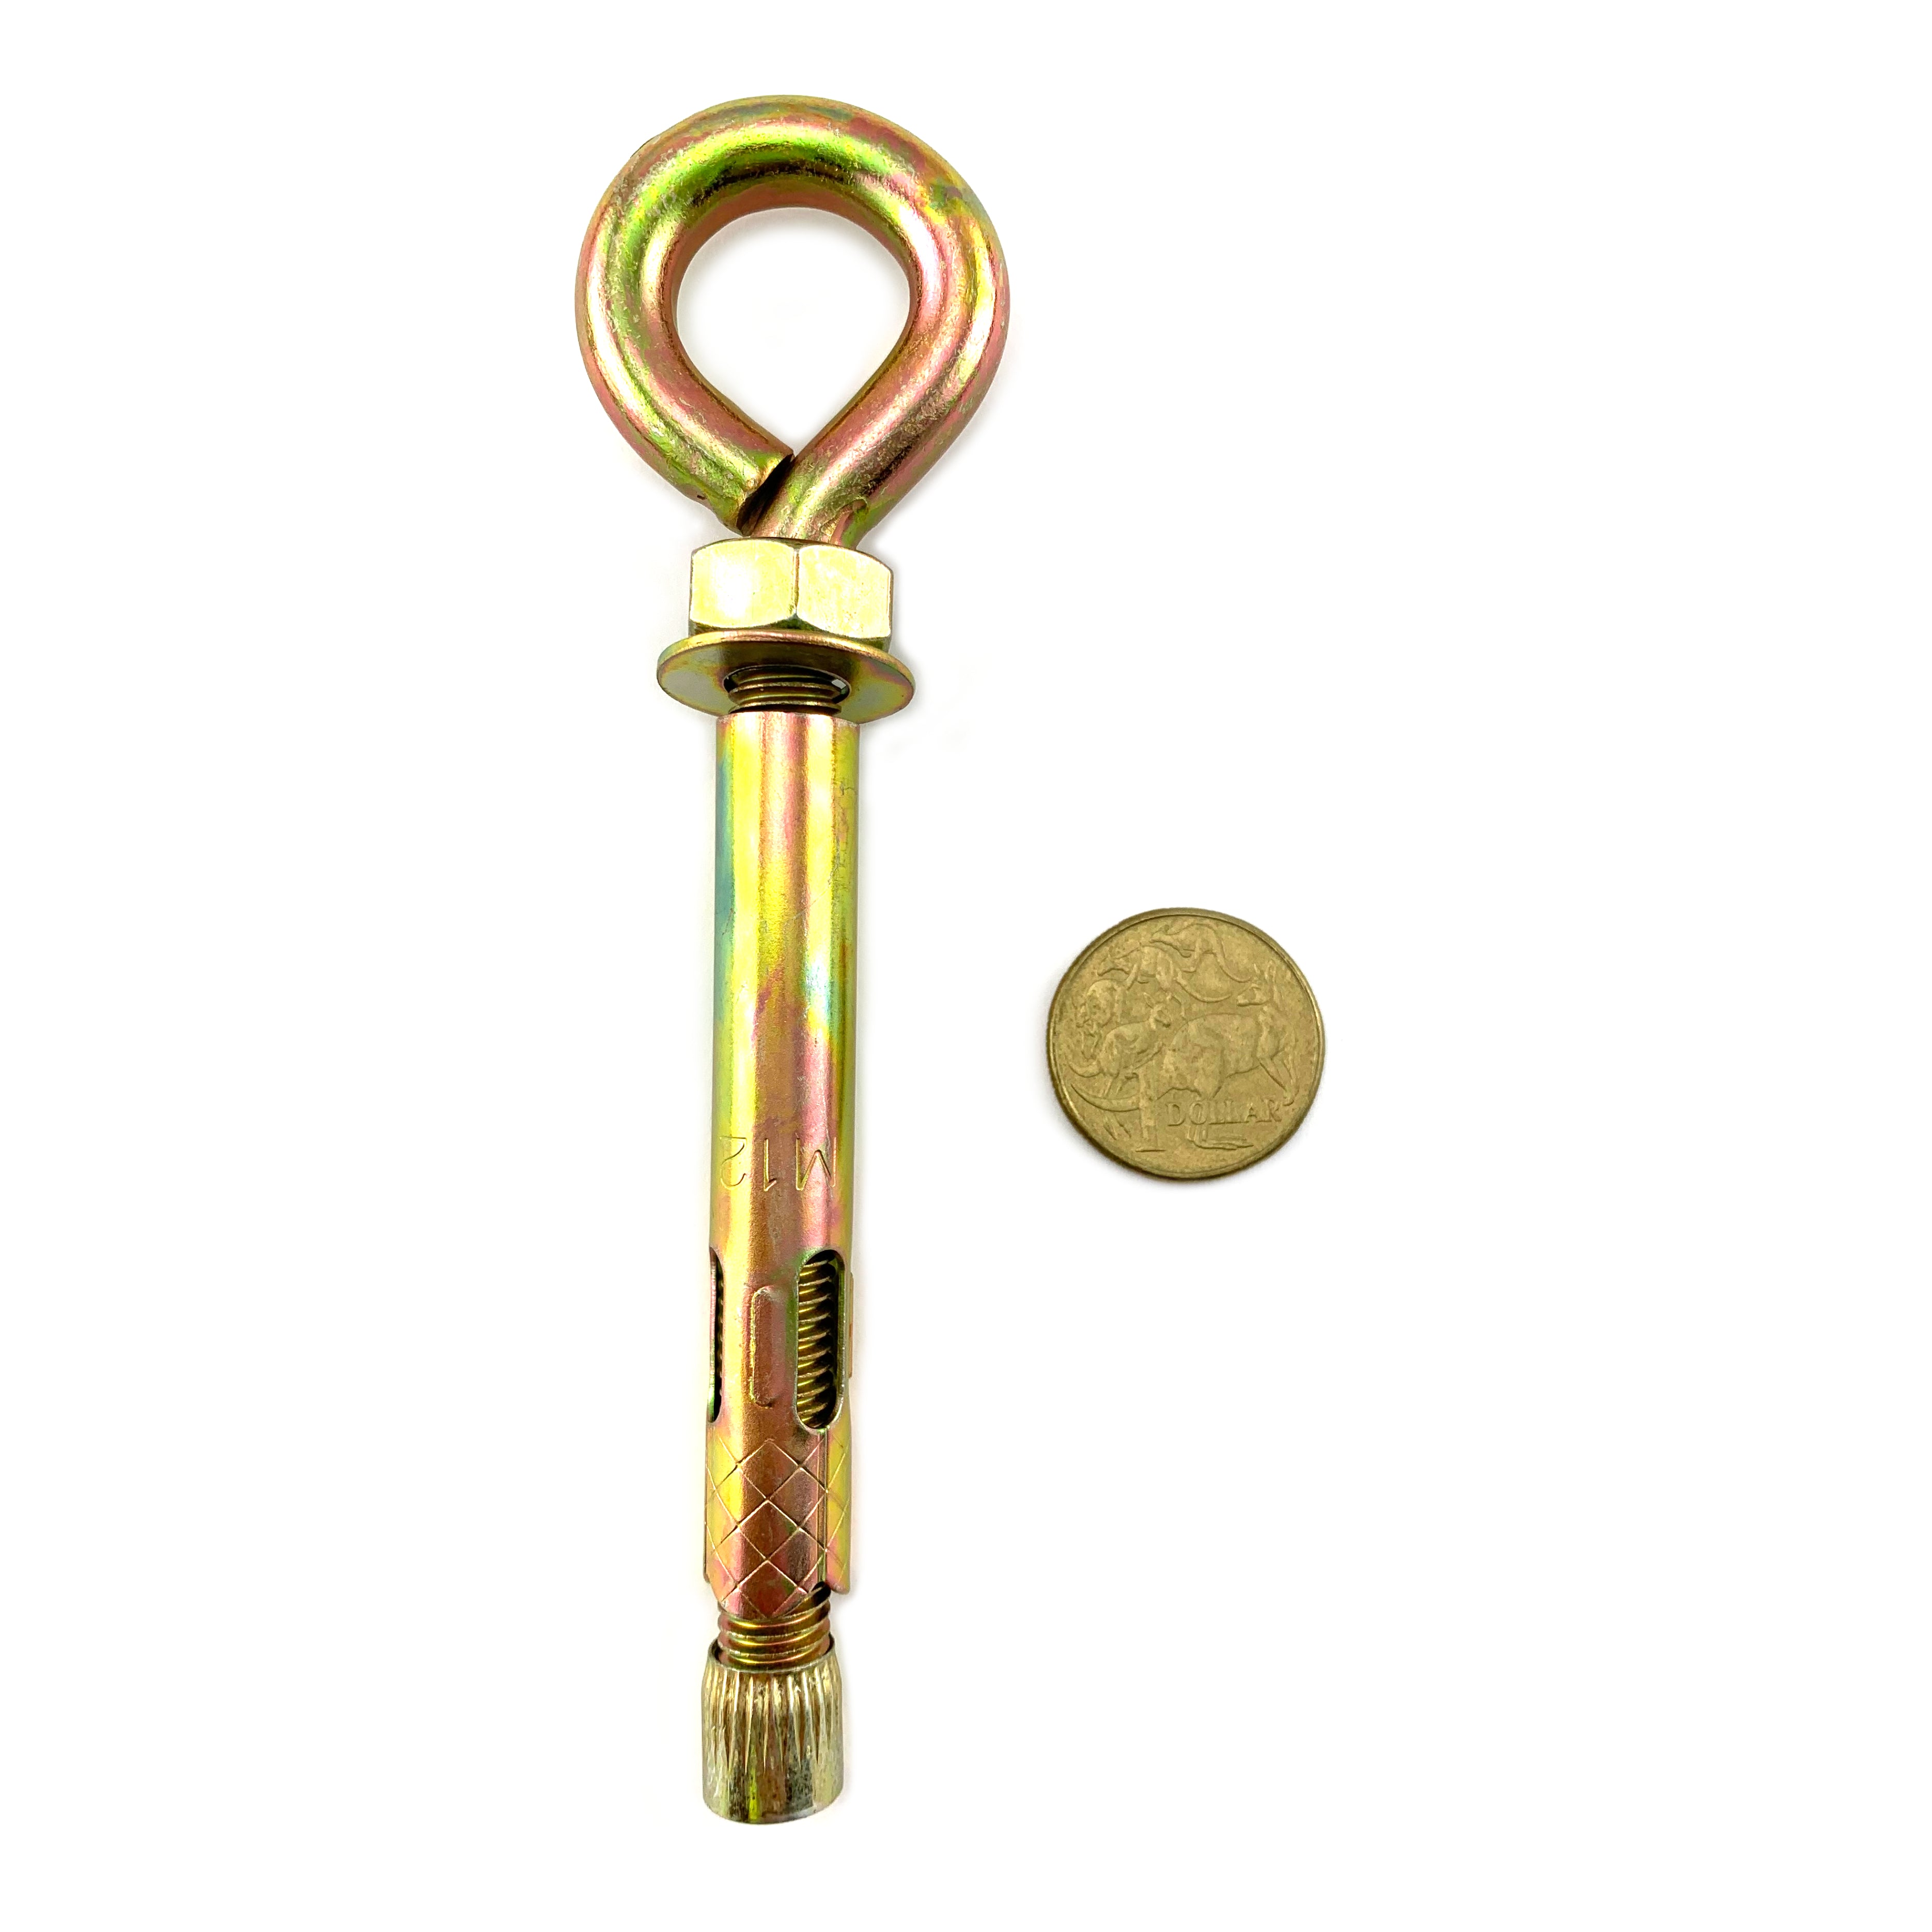 Eye anchor bolt in zinc passivated gold finish, size 10mm. Australia